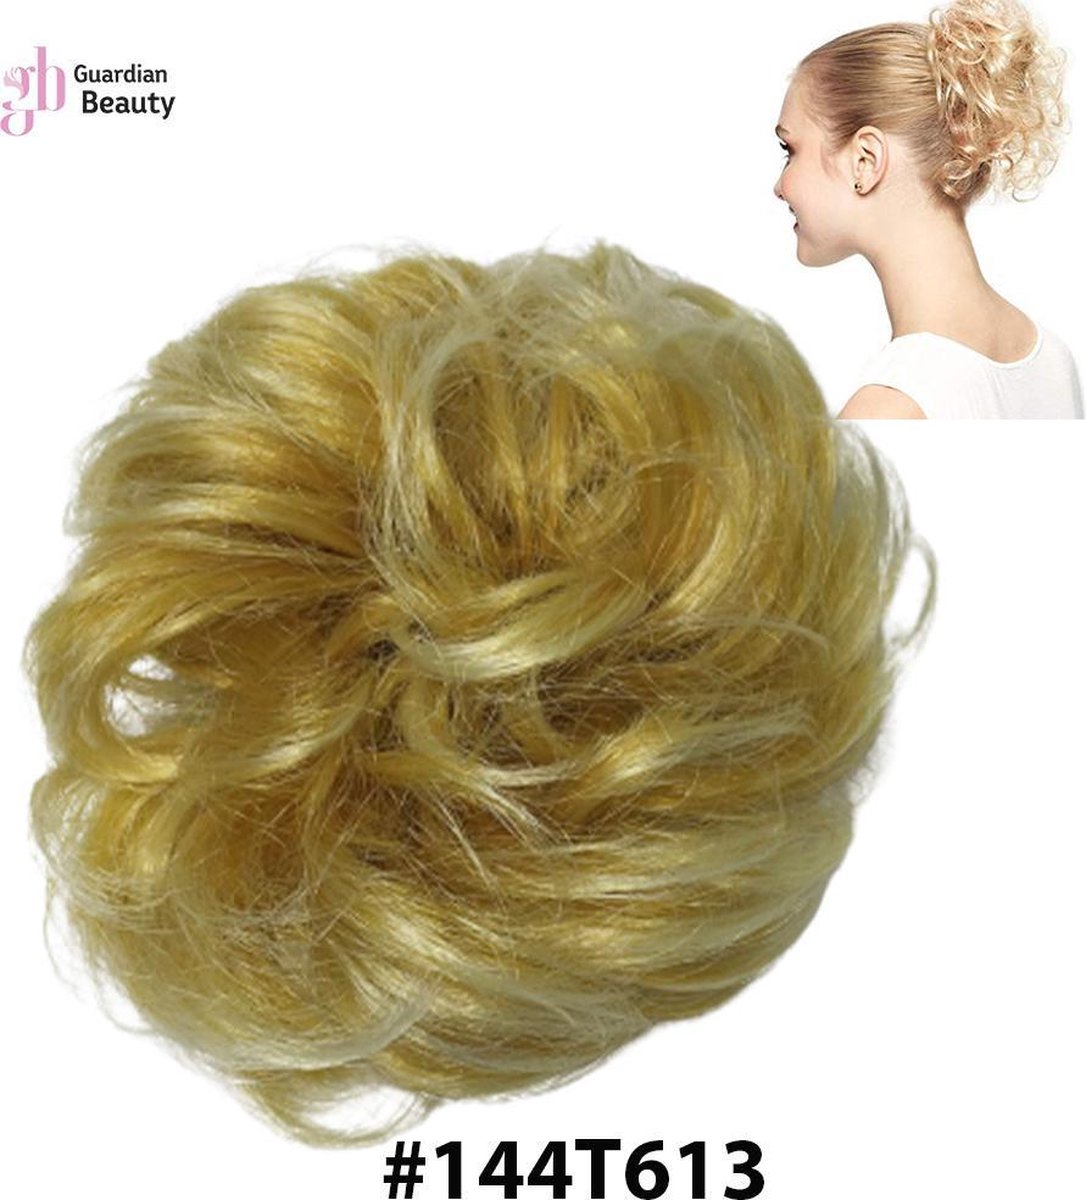 Messy Haarstuk Bun #144t613 | Haar wrap extension | Haarstuk Clip-In Twist Bun | Hair Bun | Haarstuk Hair Extensions Donut Ponytail Messy Bun - 40 Gram